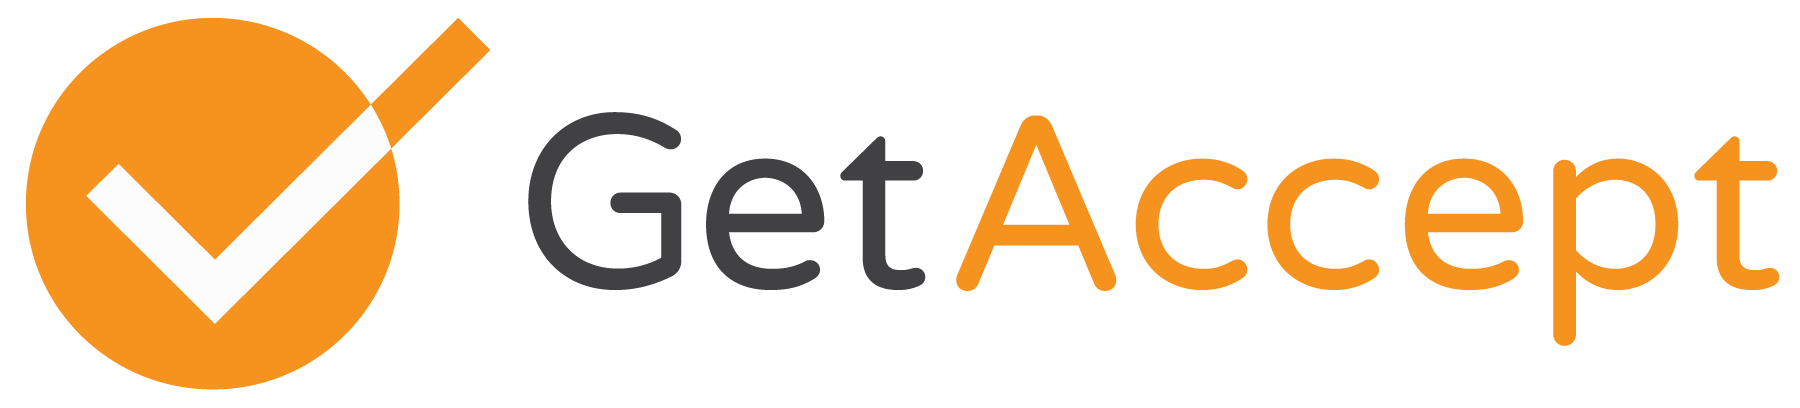 Getaccept Logo Grey Web